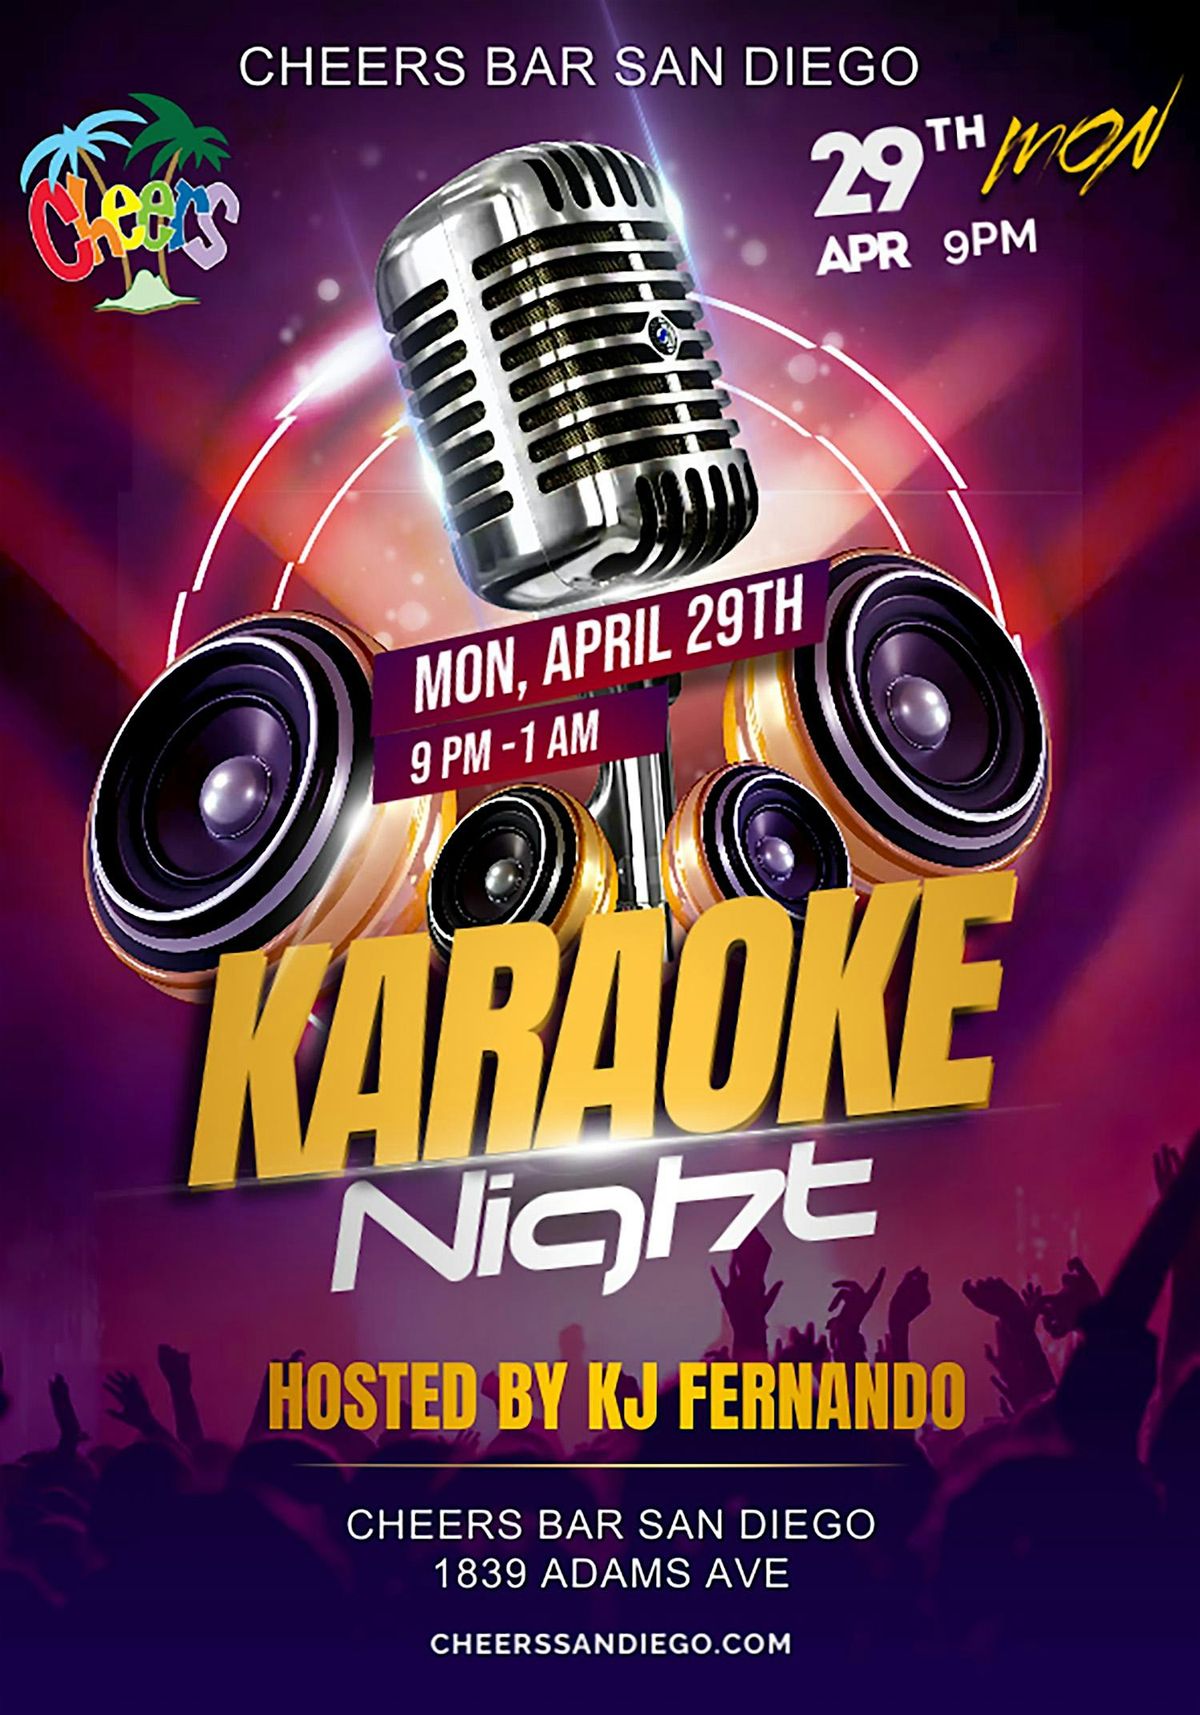 Cheers Bar San Diego Karaoke Night with KJ Fernando